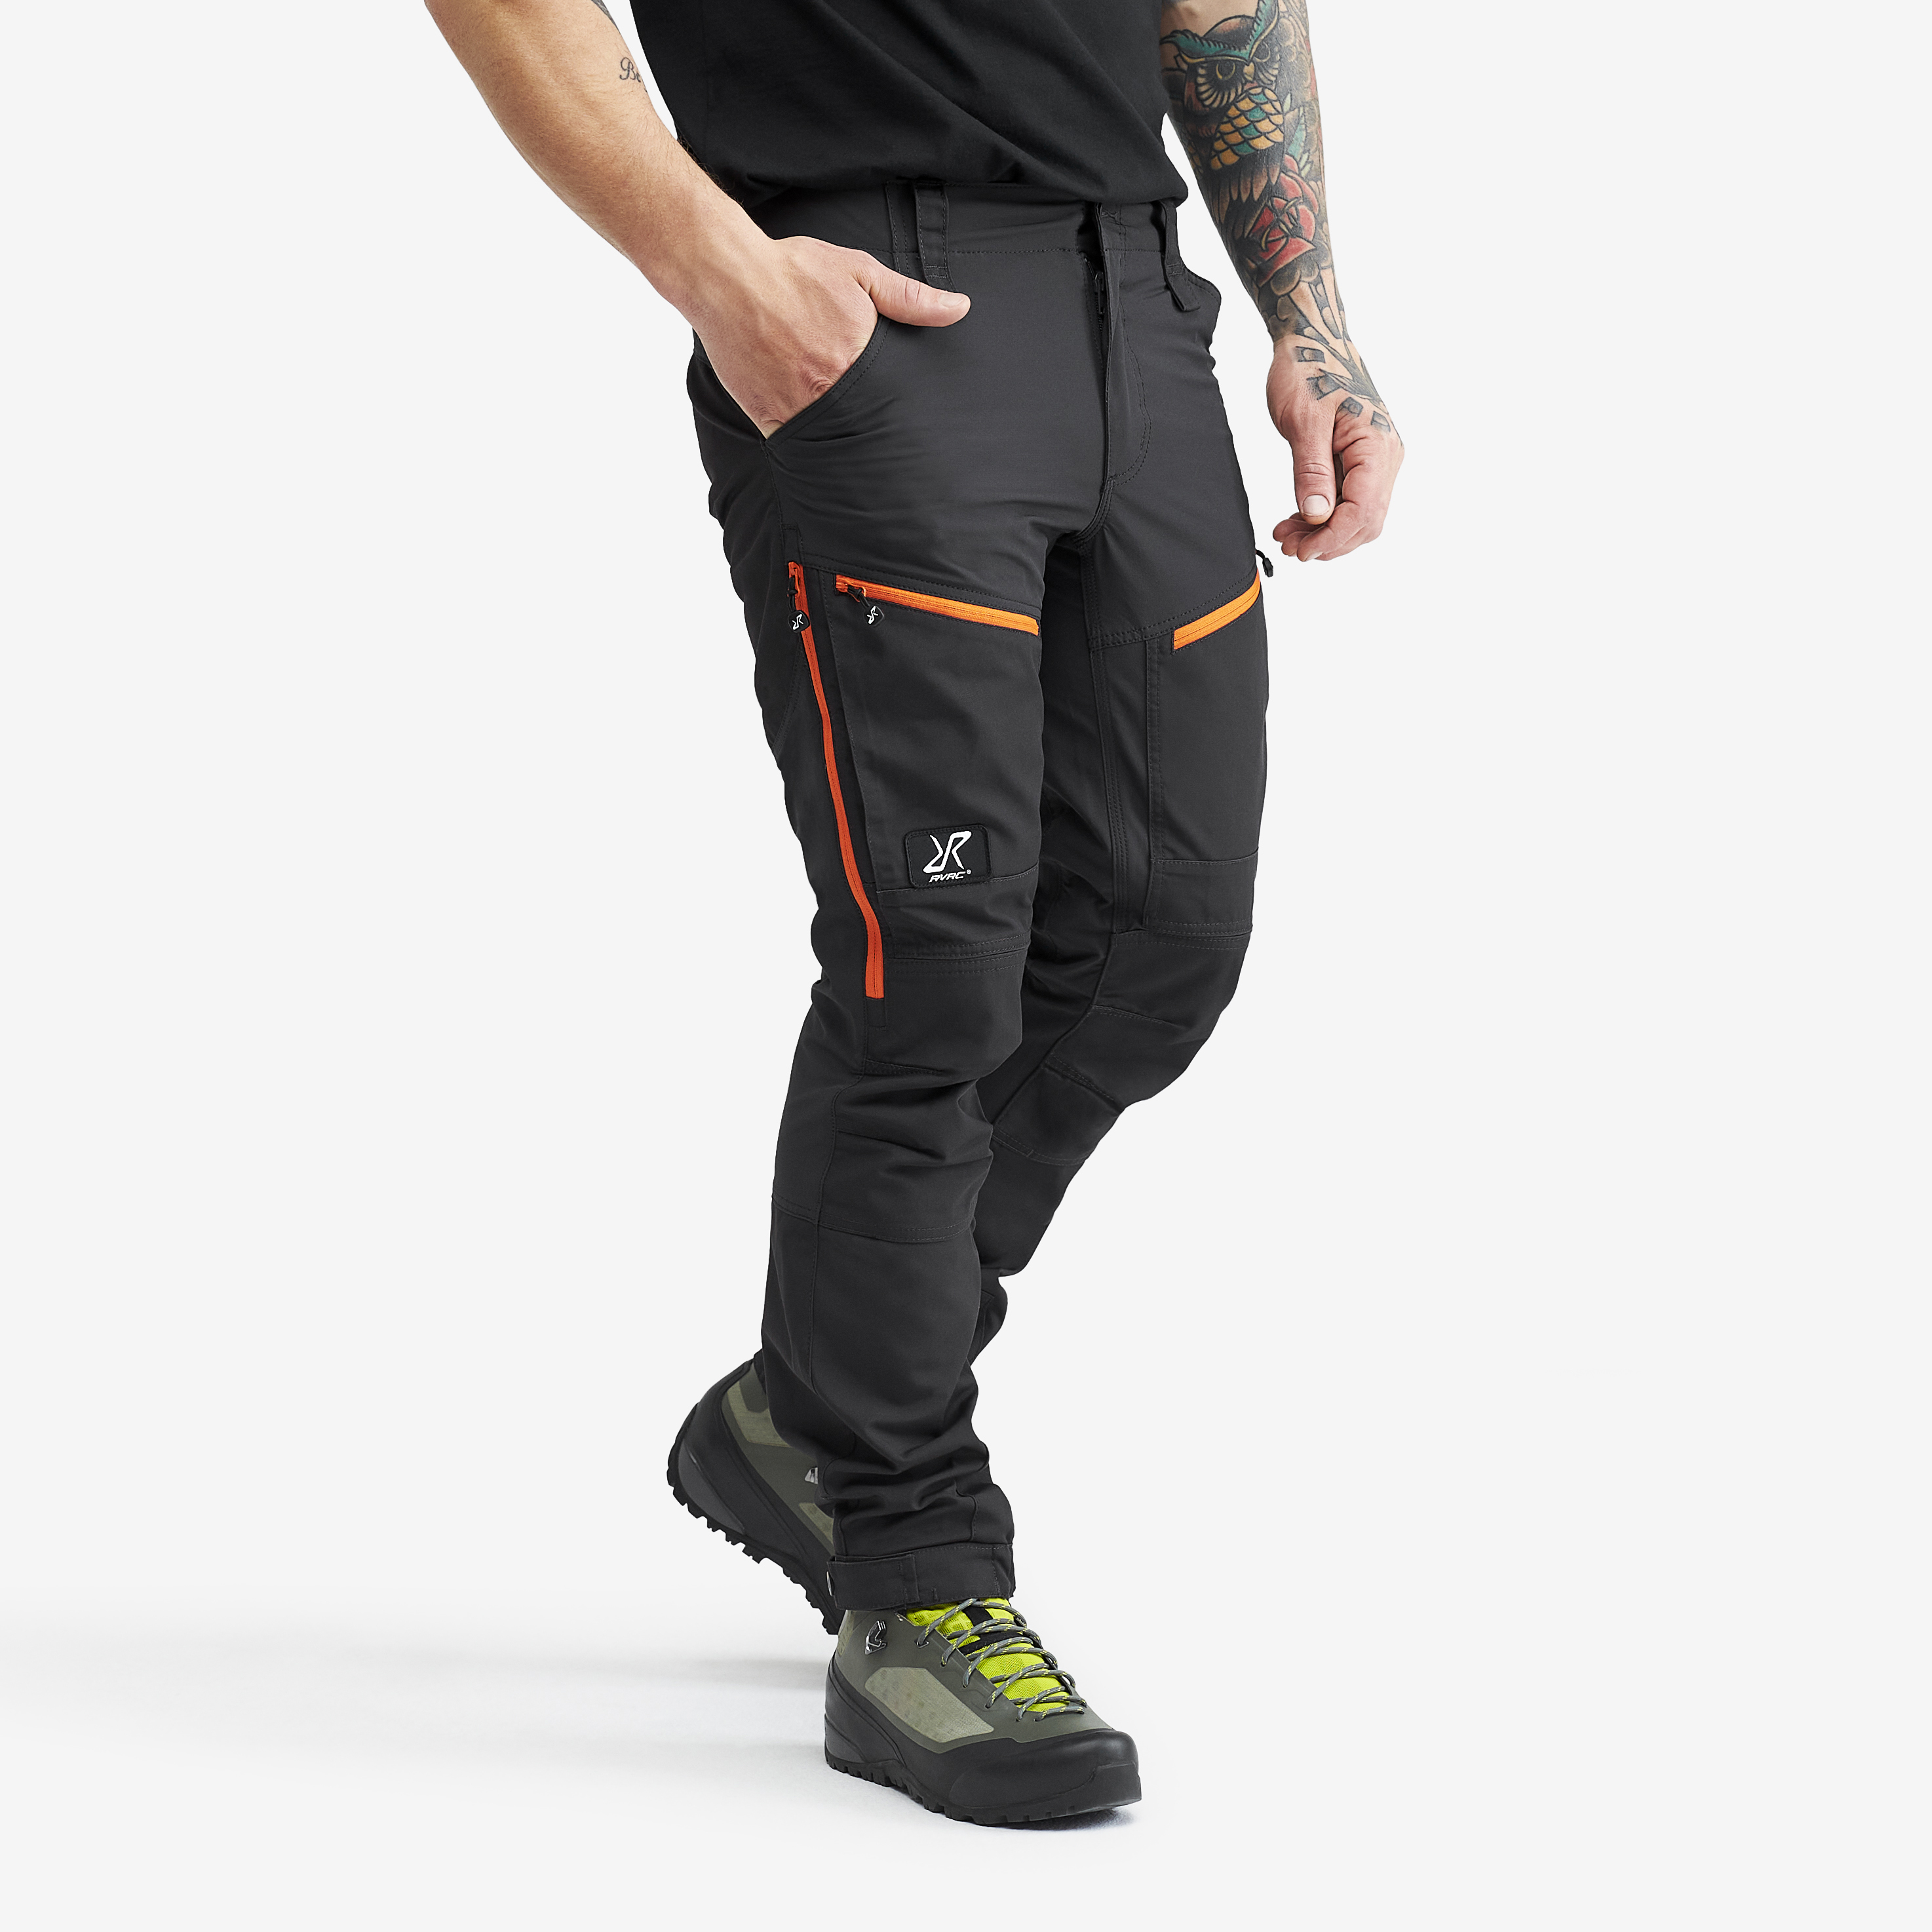 RVRC GP Pro Short hiking trousers for men in dark grey